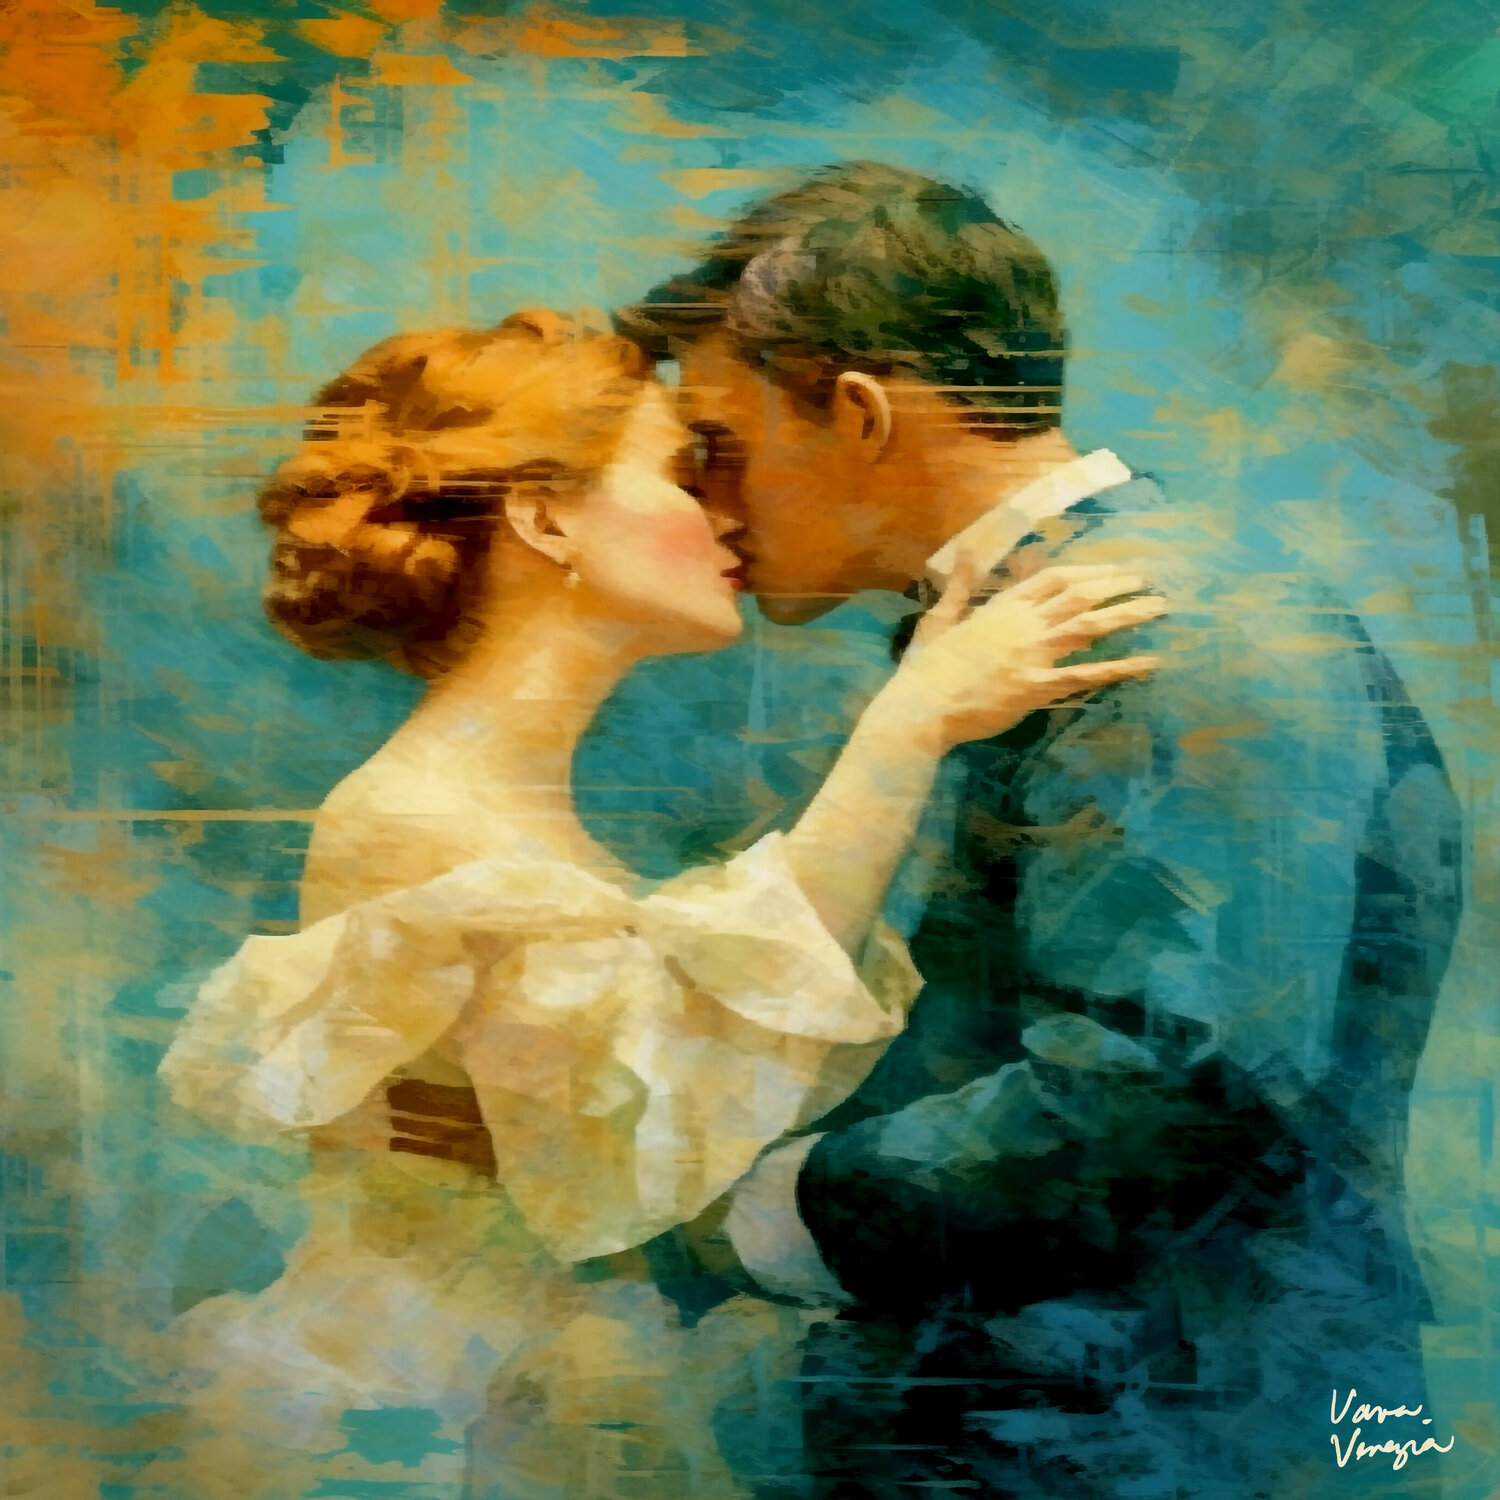 dani dubois recommends Man Kissing Woman Painting